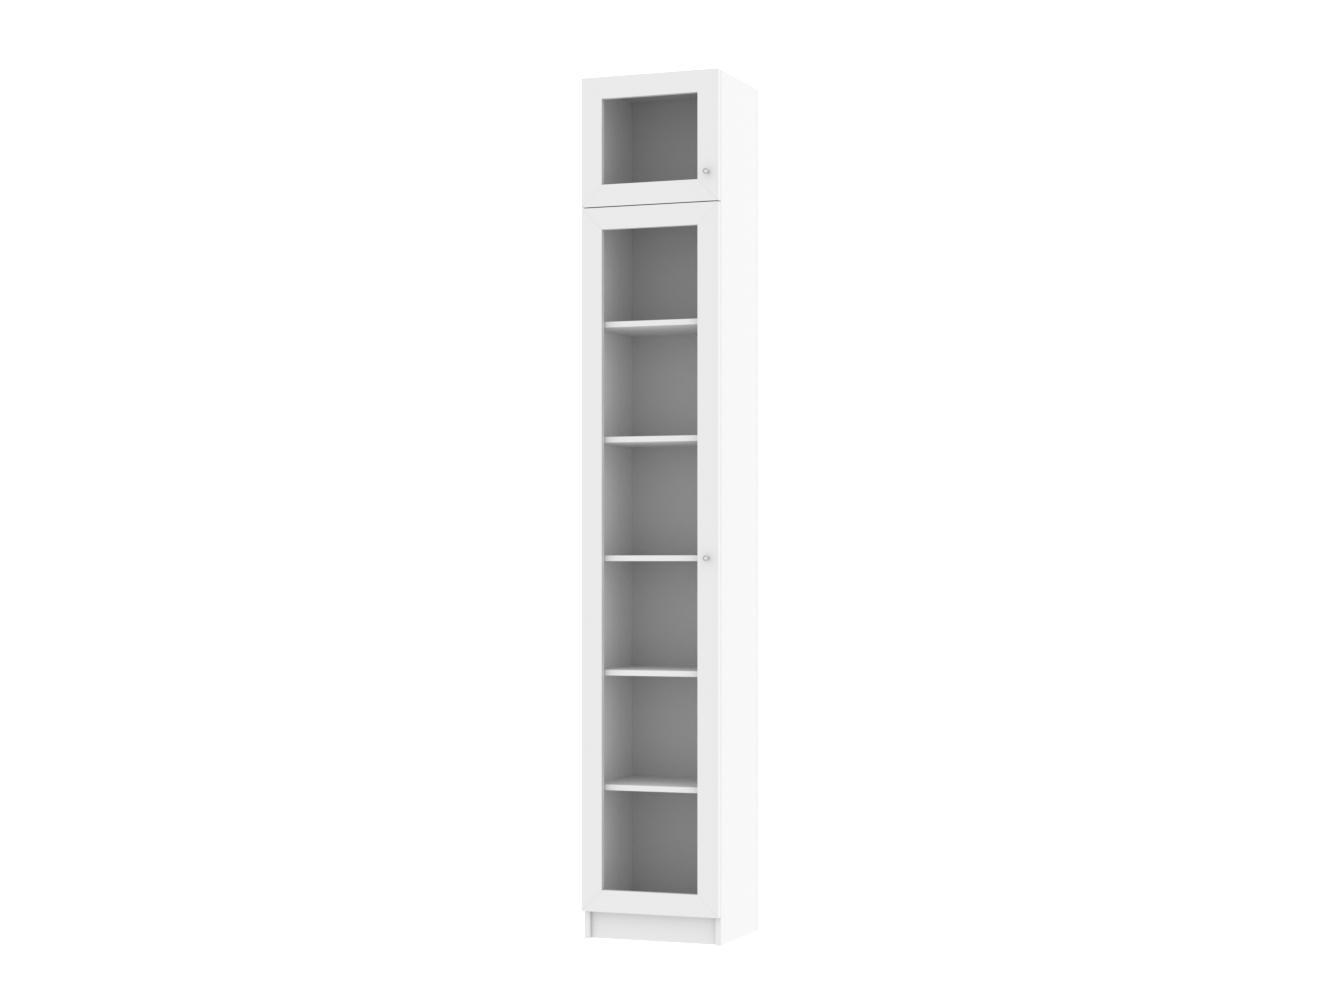 Книжный шкаф Билли 382 white ИКЕА (IKEA) изображение товара